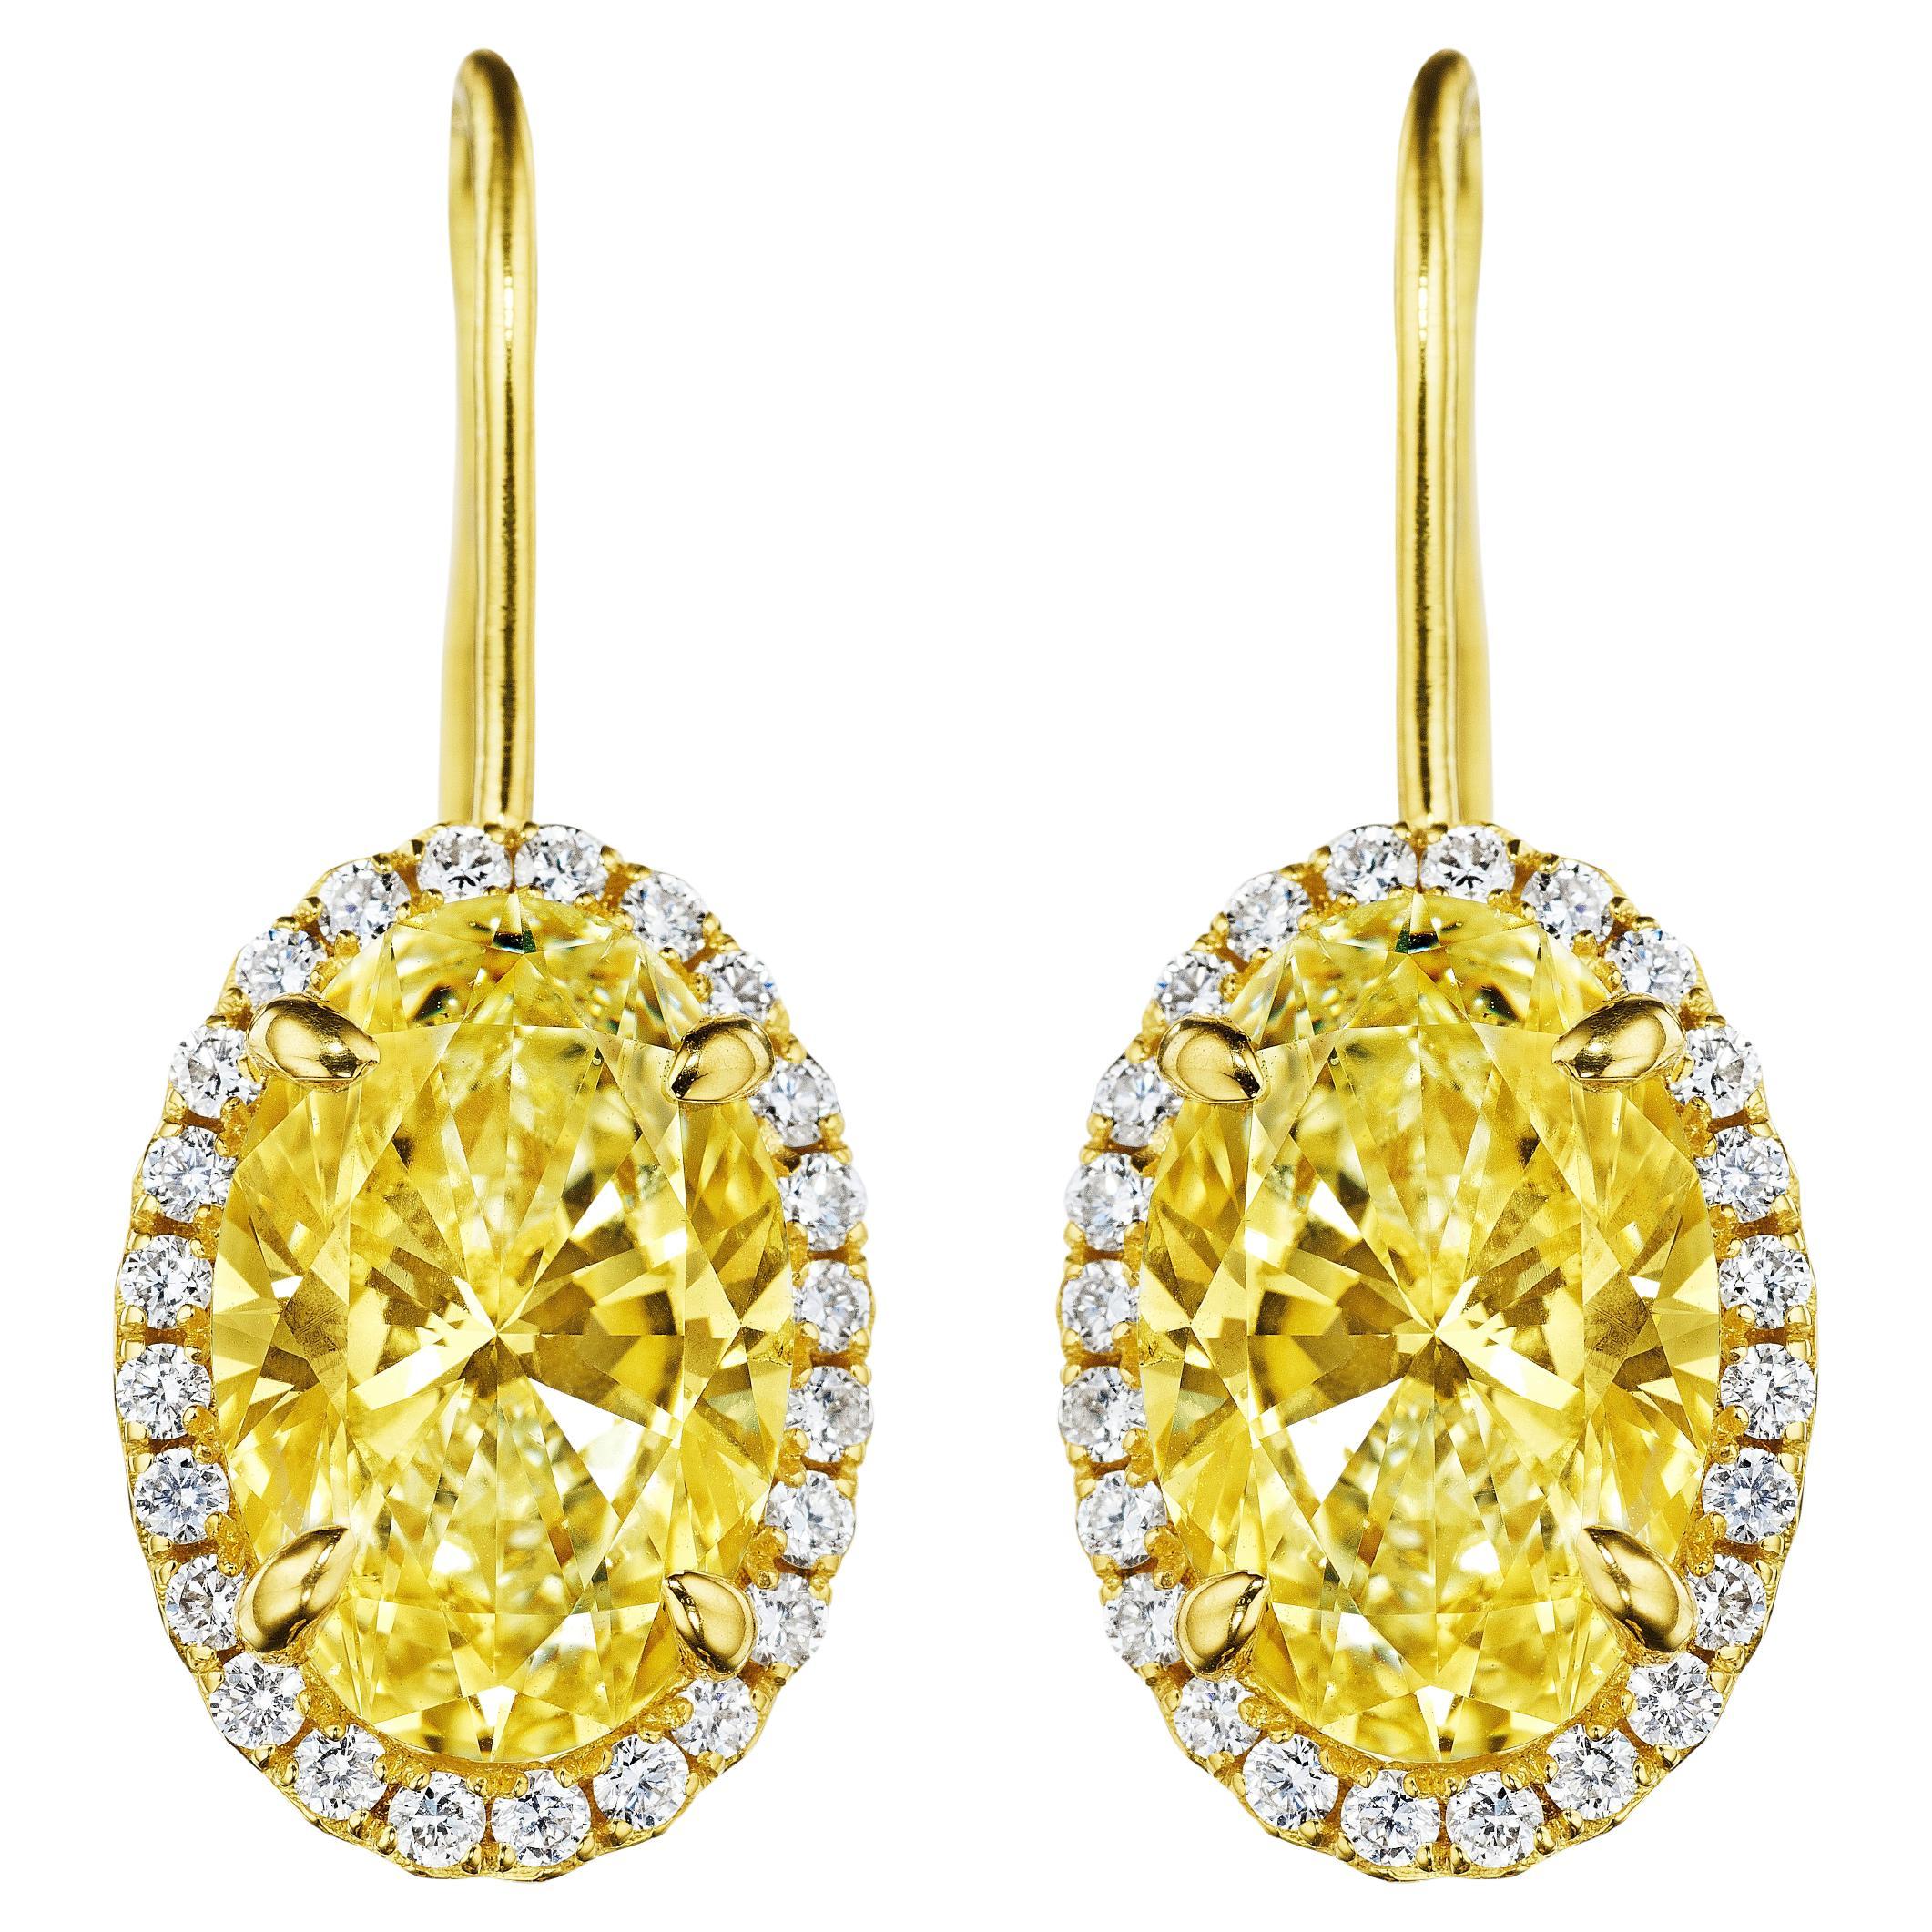 6.13ct GIA Certified Oval Yellow Diamond Earrings in 18KT Gold